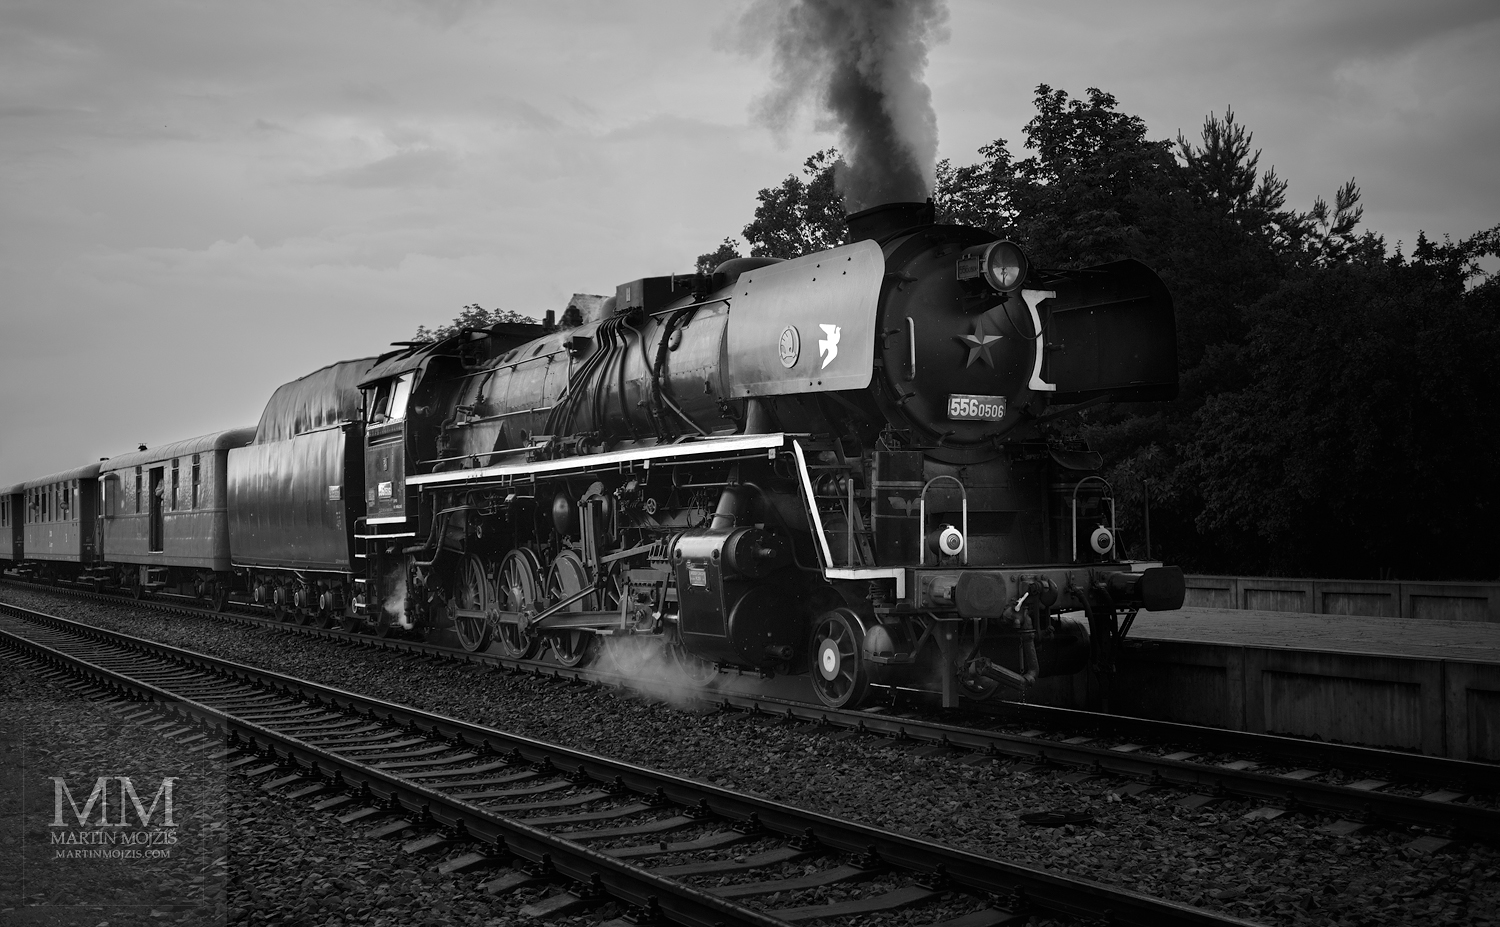 Fine Art photograph of the steam locomotive no. 556 0506 in head of passenger train. Martin Mojzis.